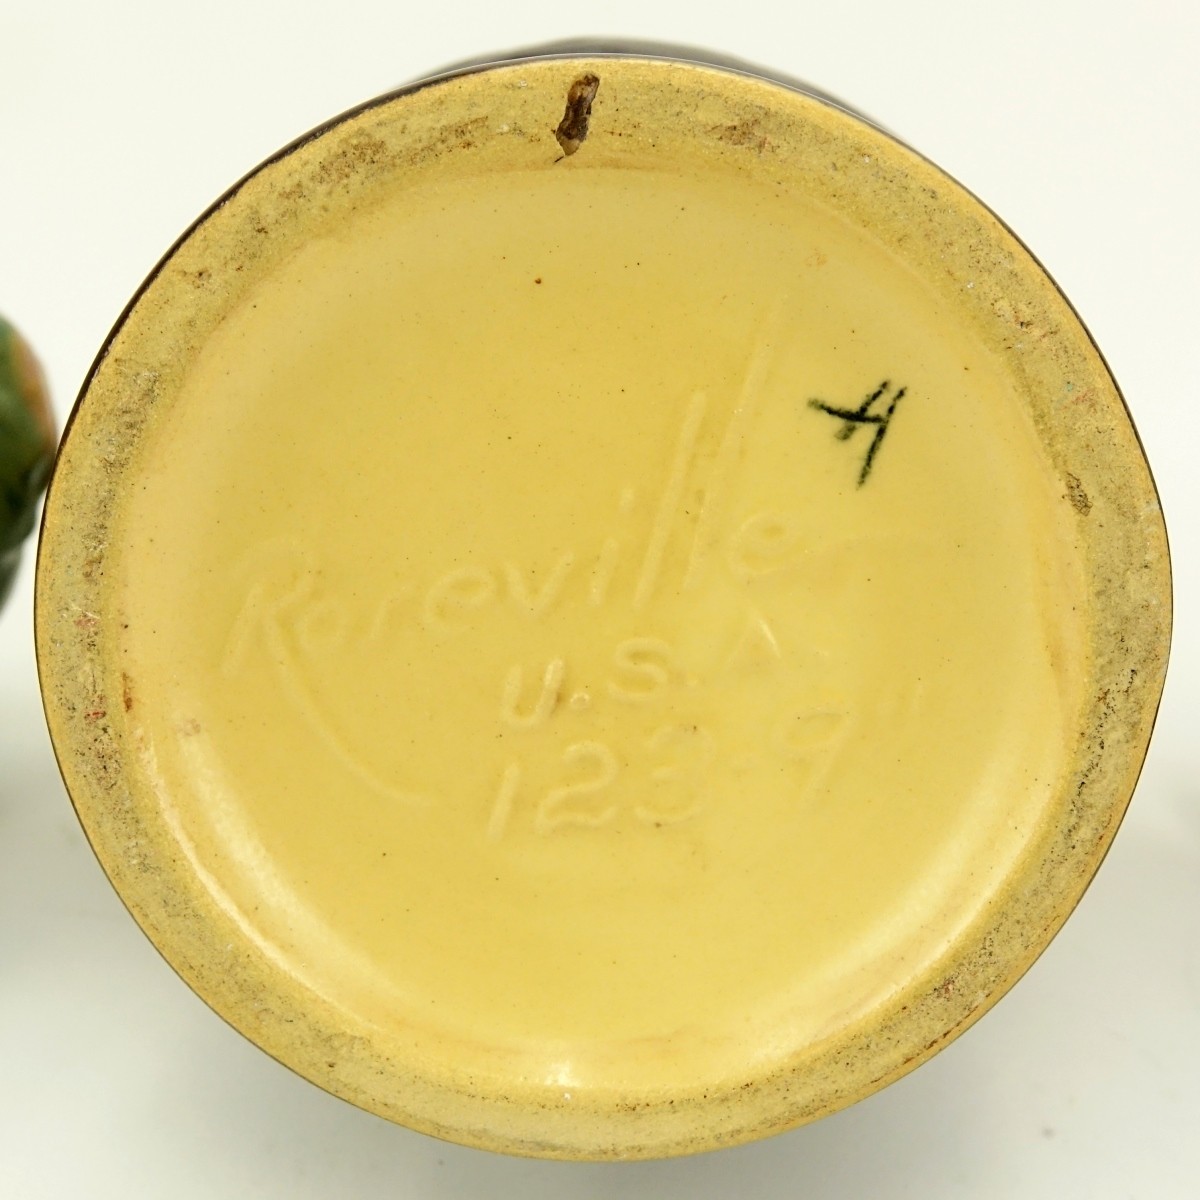 Three (3) Roseville Pottery Vases